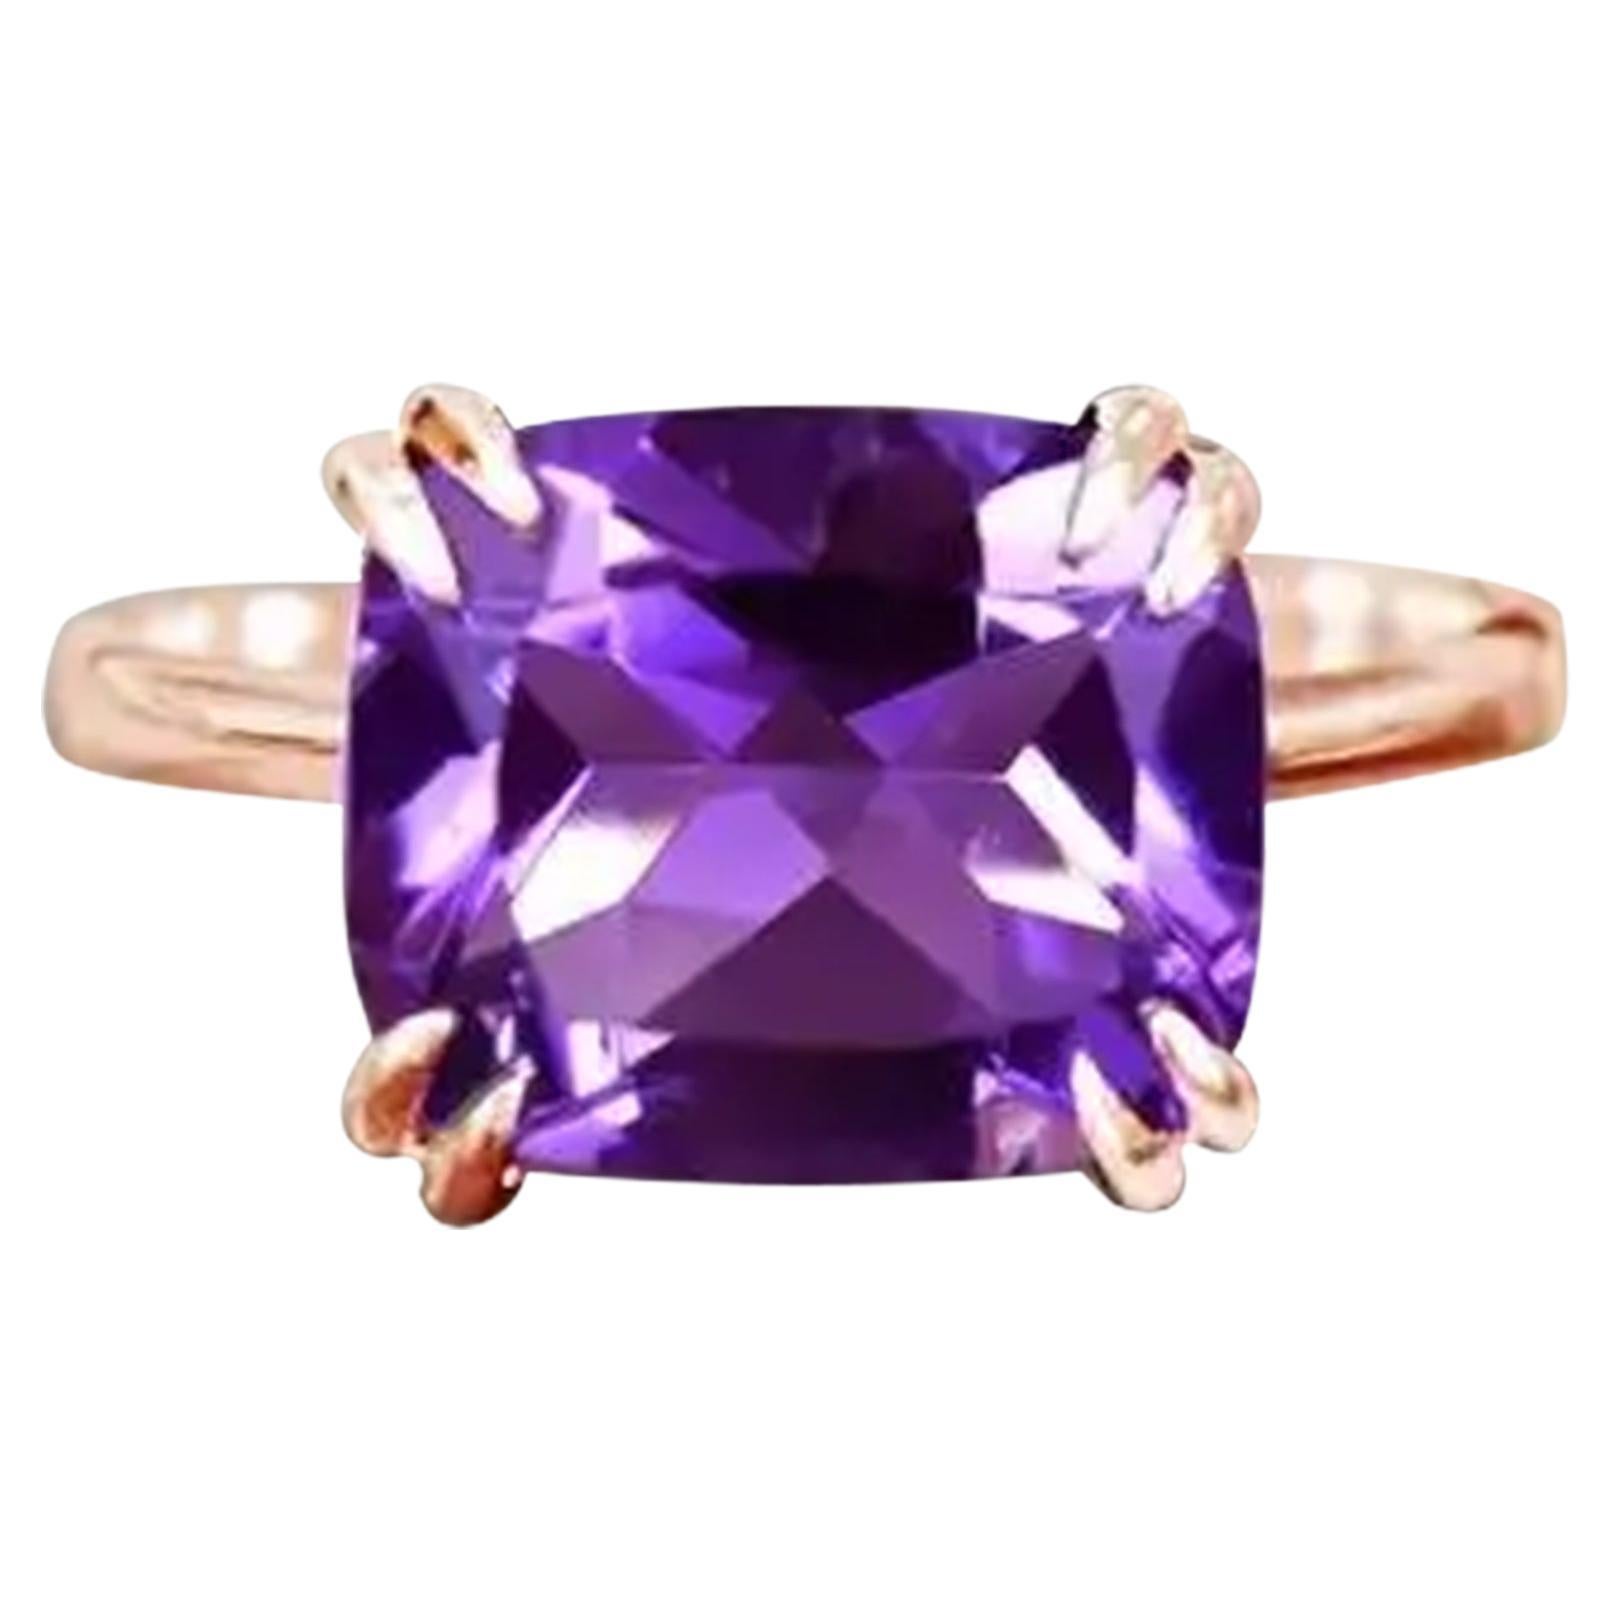 For Sale:  14k Gold Cushion 12x10 mm Rectangle Gemstone Ring Gemstone Engagement Ring